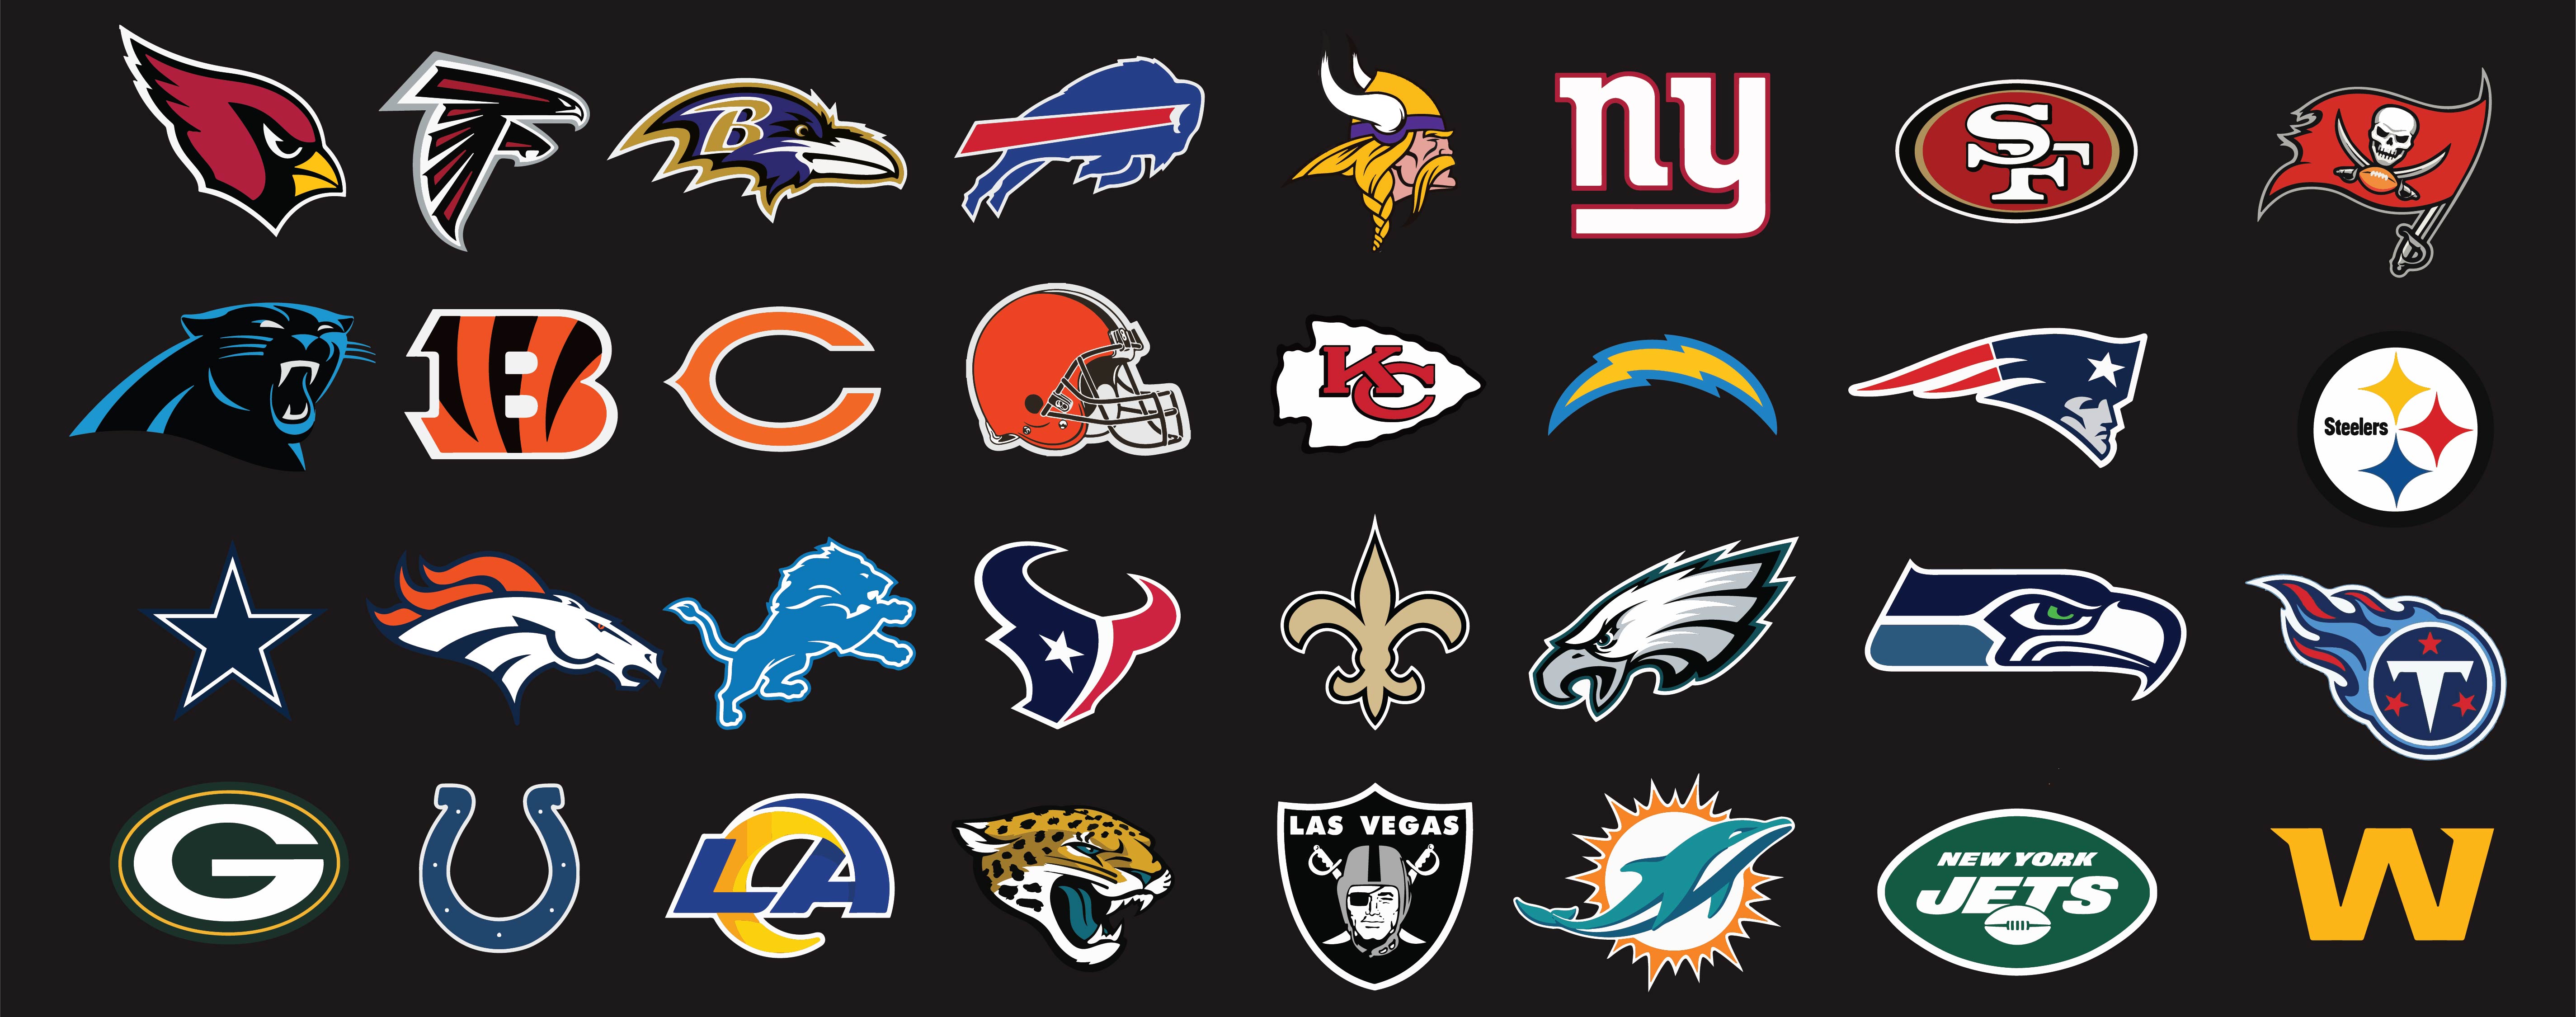 10 Best NFL Football Logos Printable